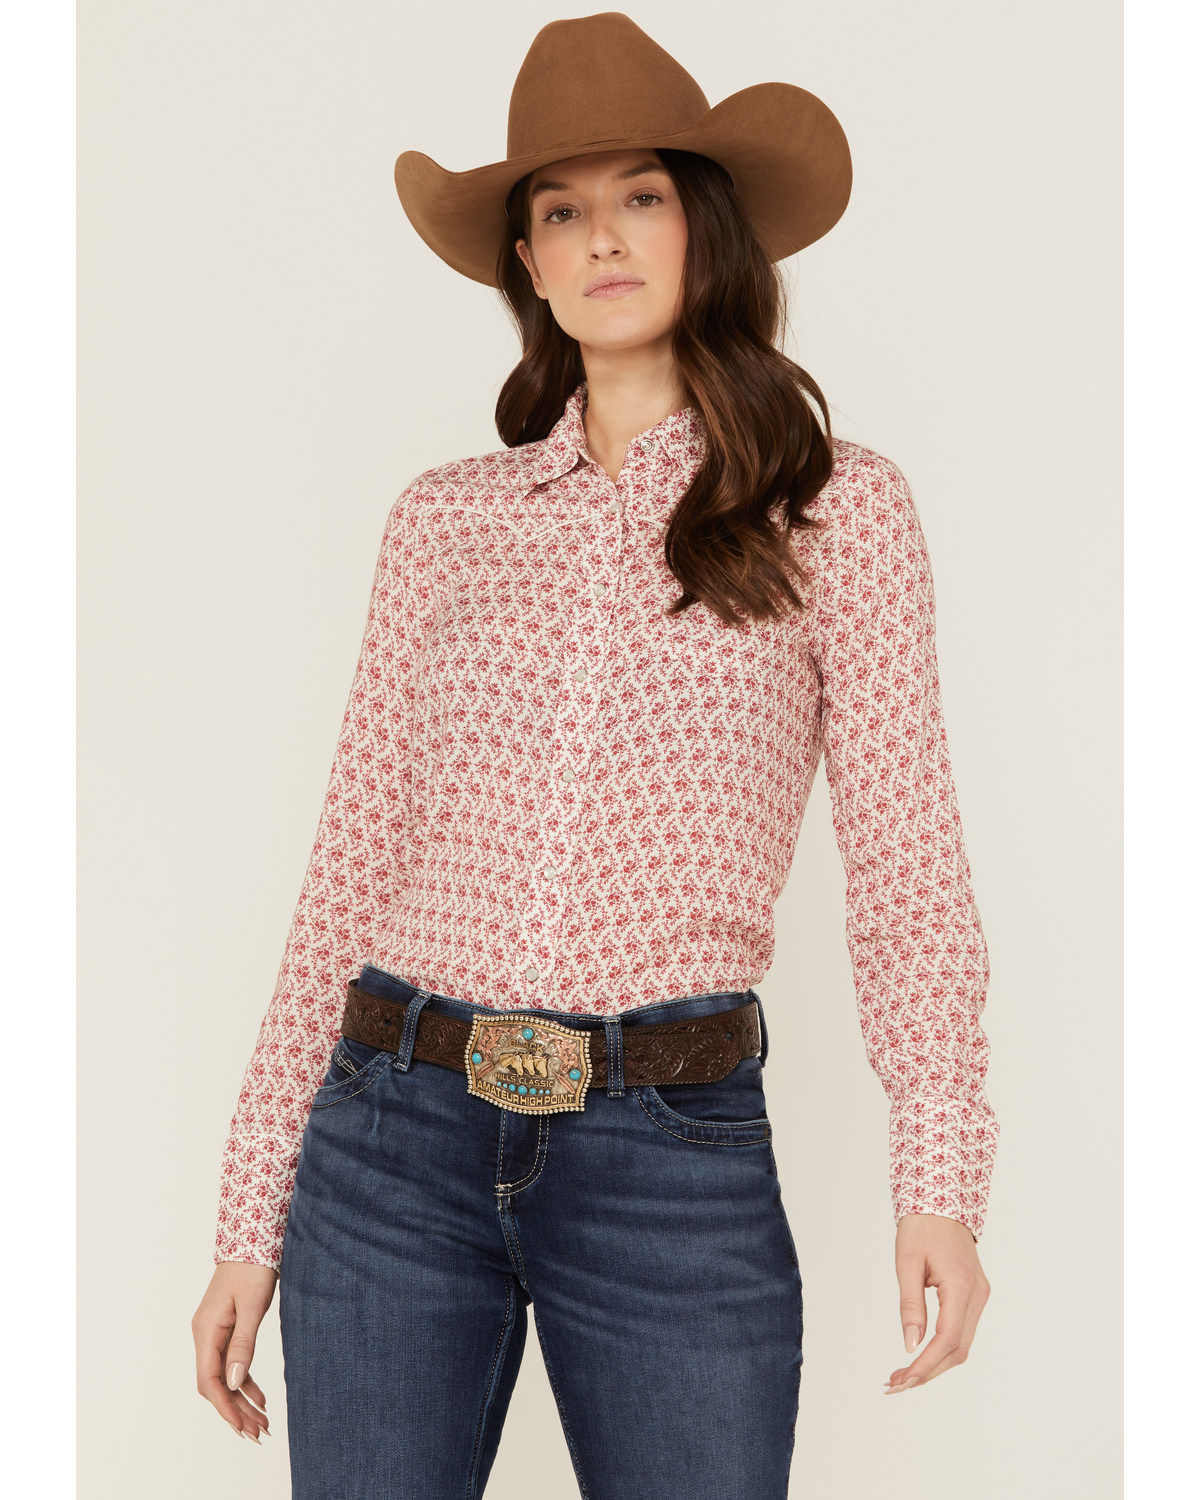 Stetson Women's Floral Print Long Sleeve Pearl Snap Western Shirt